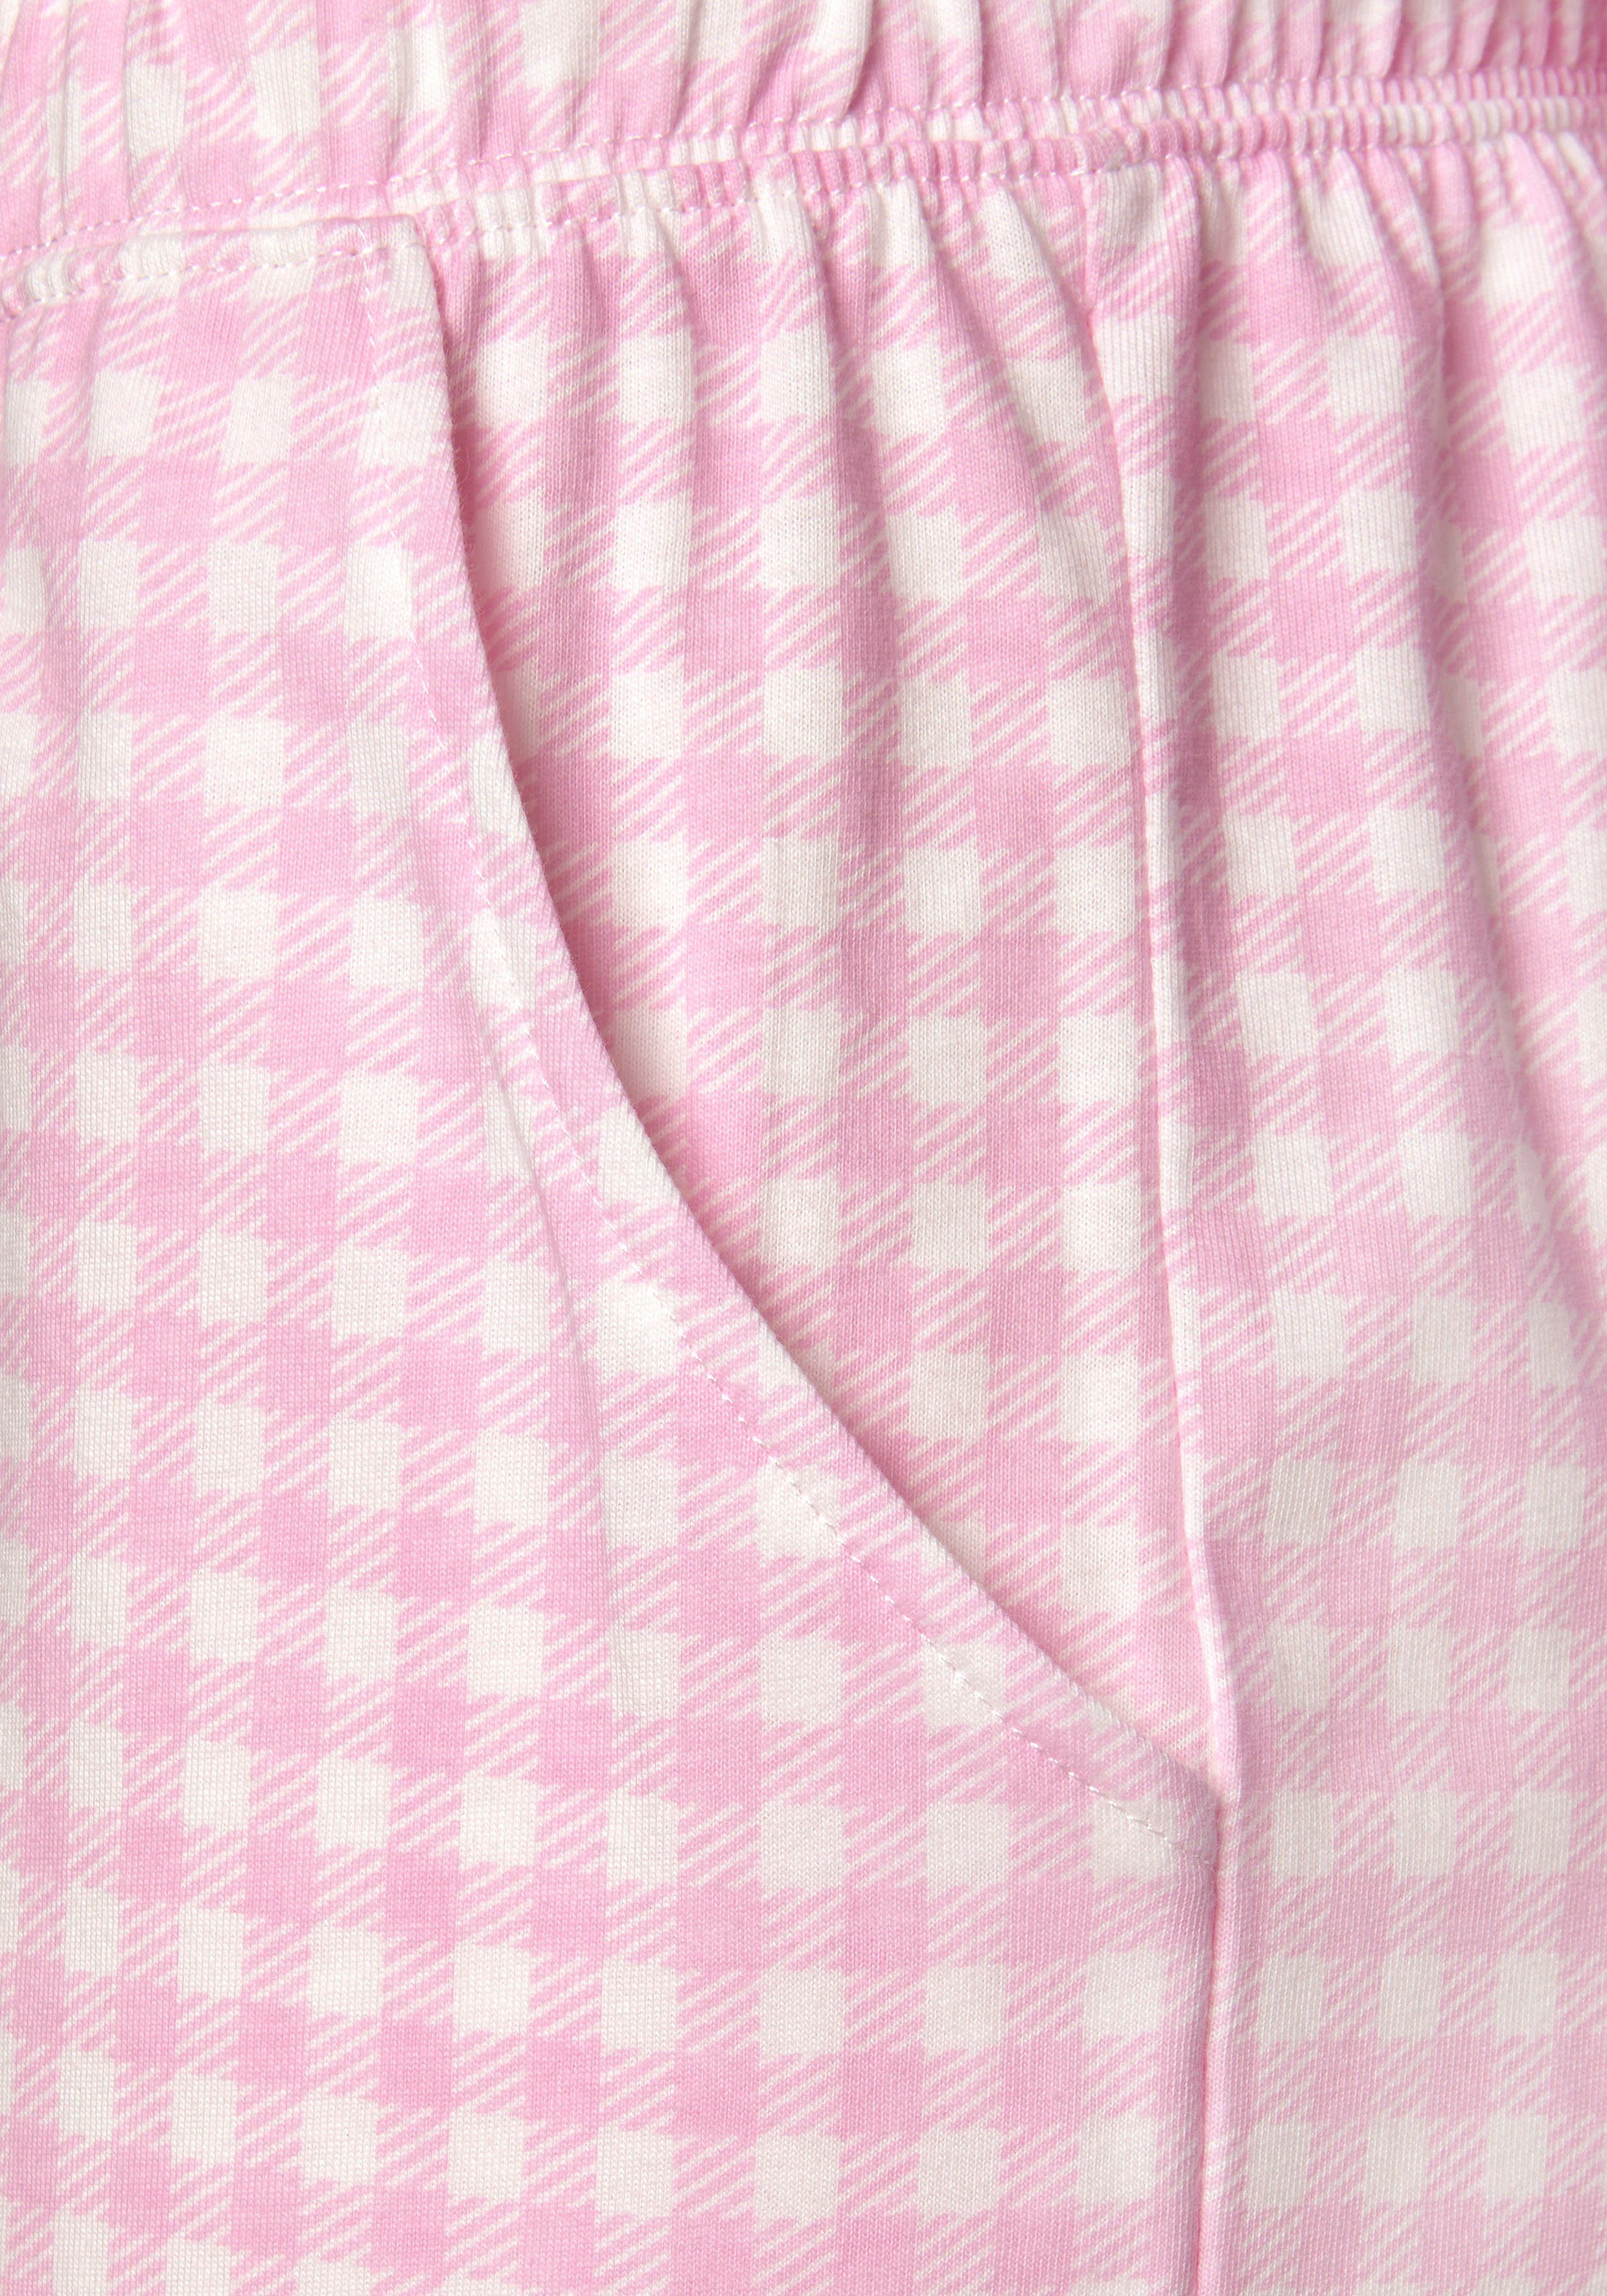 (2 1 s.Oliver Stück) tlg., rosa-kariert Pyjama